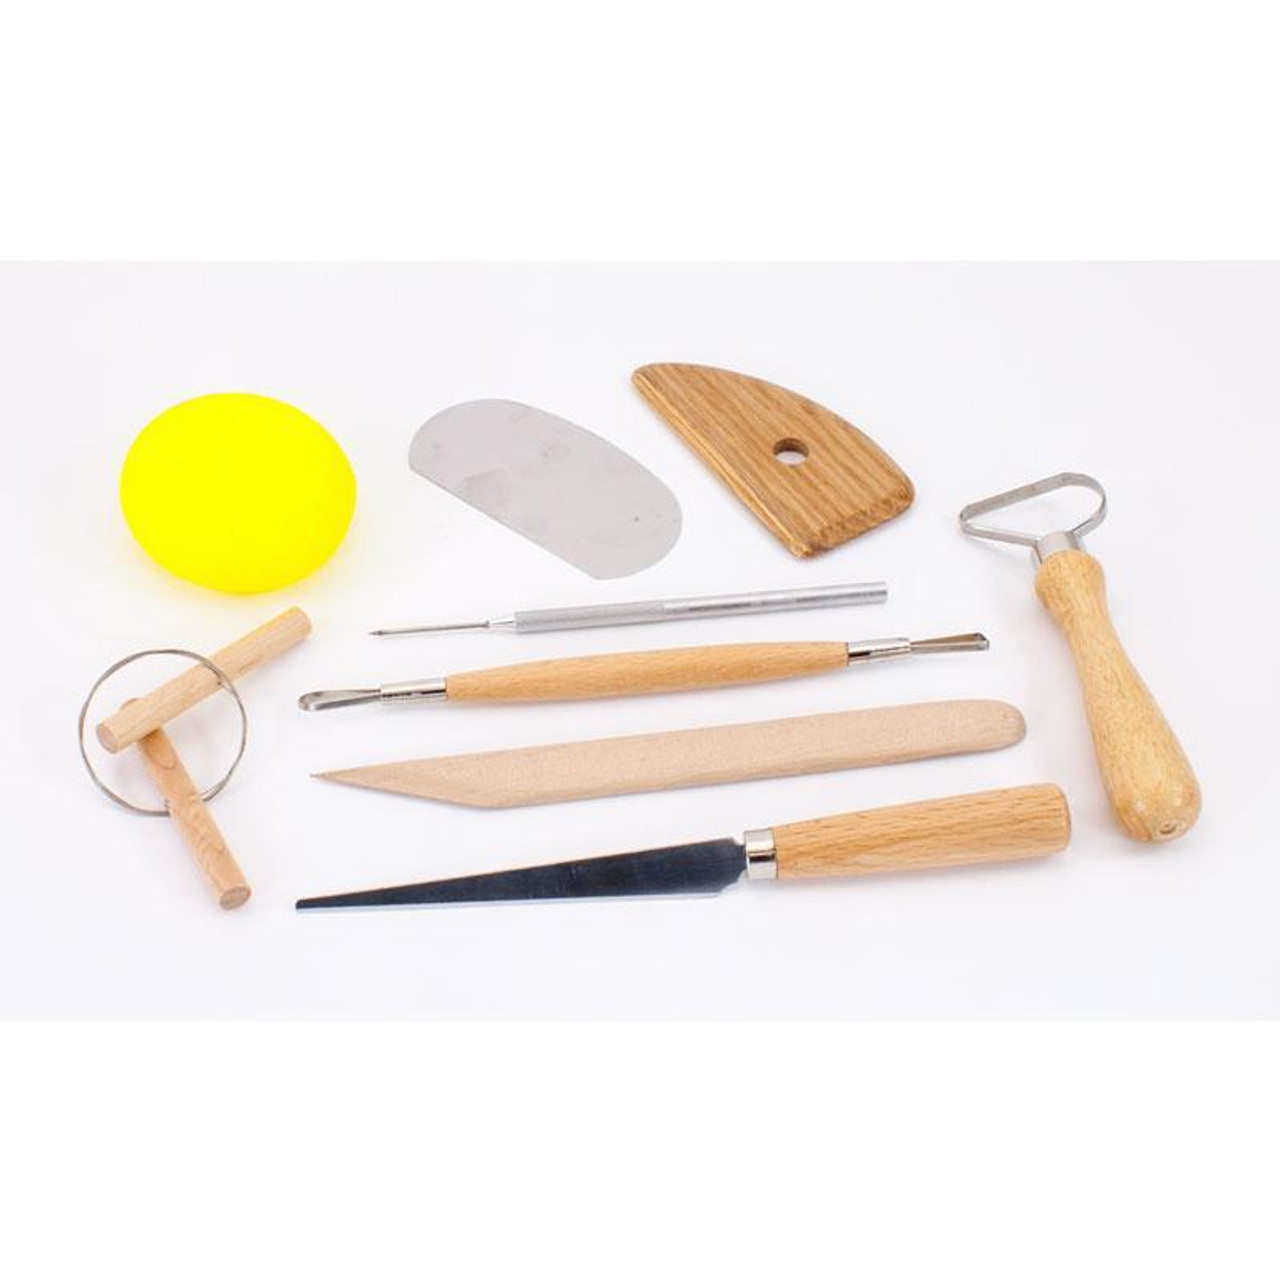 Xiem Tools Needle Tool Stoneware